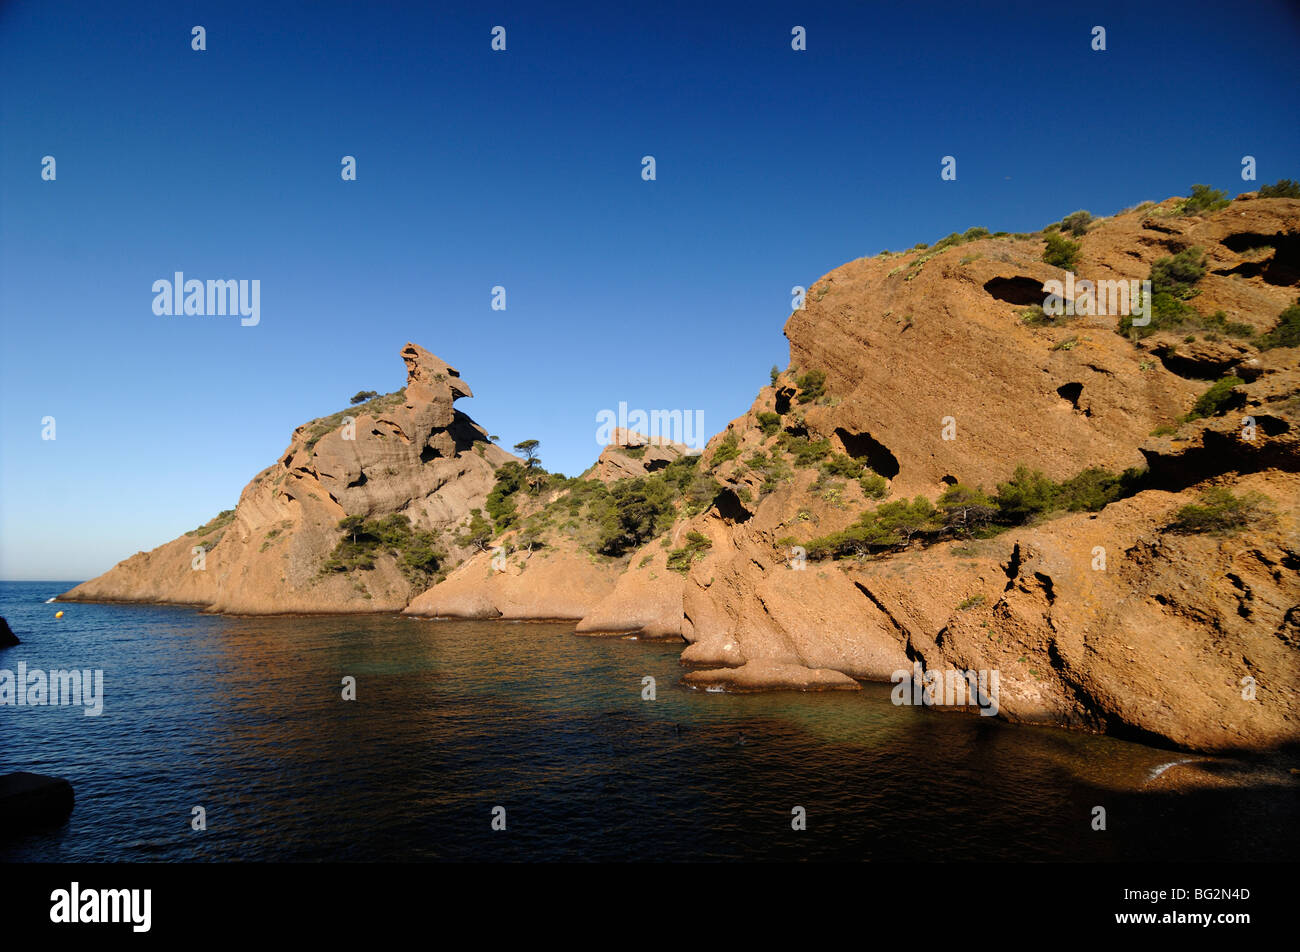 Punta rocciosa, baia e insenatura costiera a Calanque de Figuerolles, Parco Nazionale di Calanques, Costa Mediterranea, la Ciotat, Provenza, Francia Foto Stock